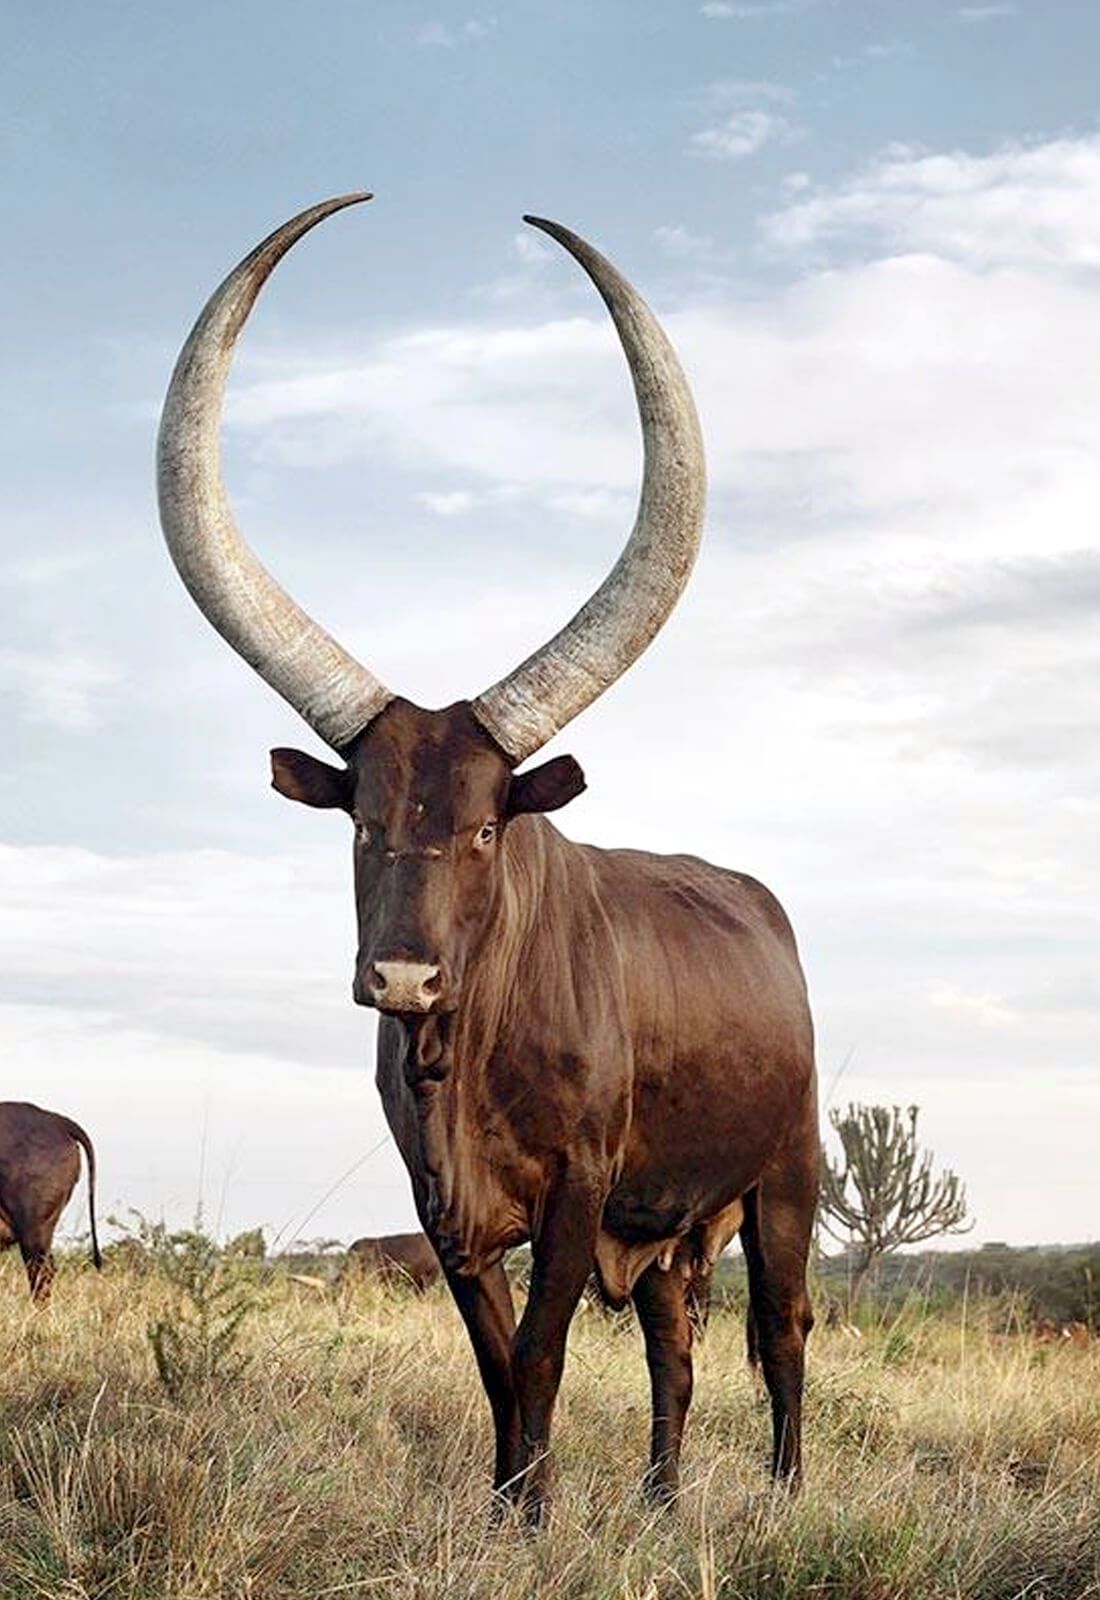 Ugandan Ankole cow with large horns 